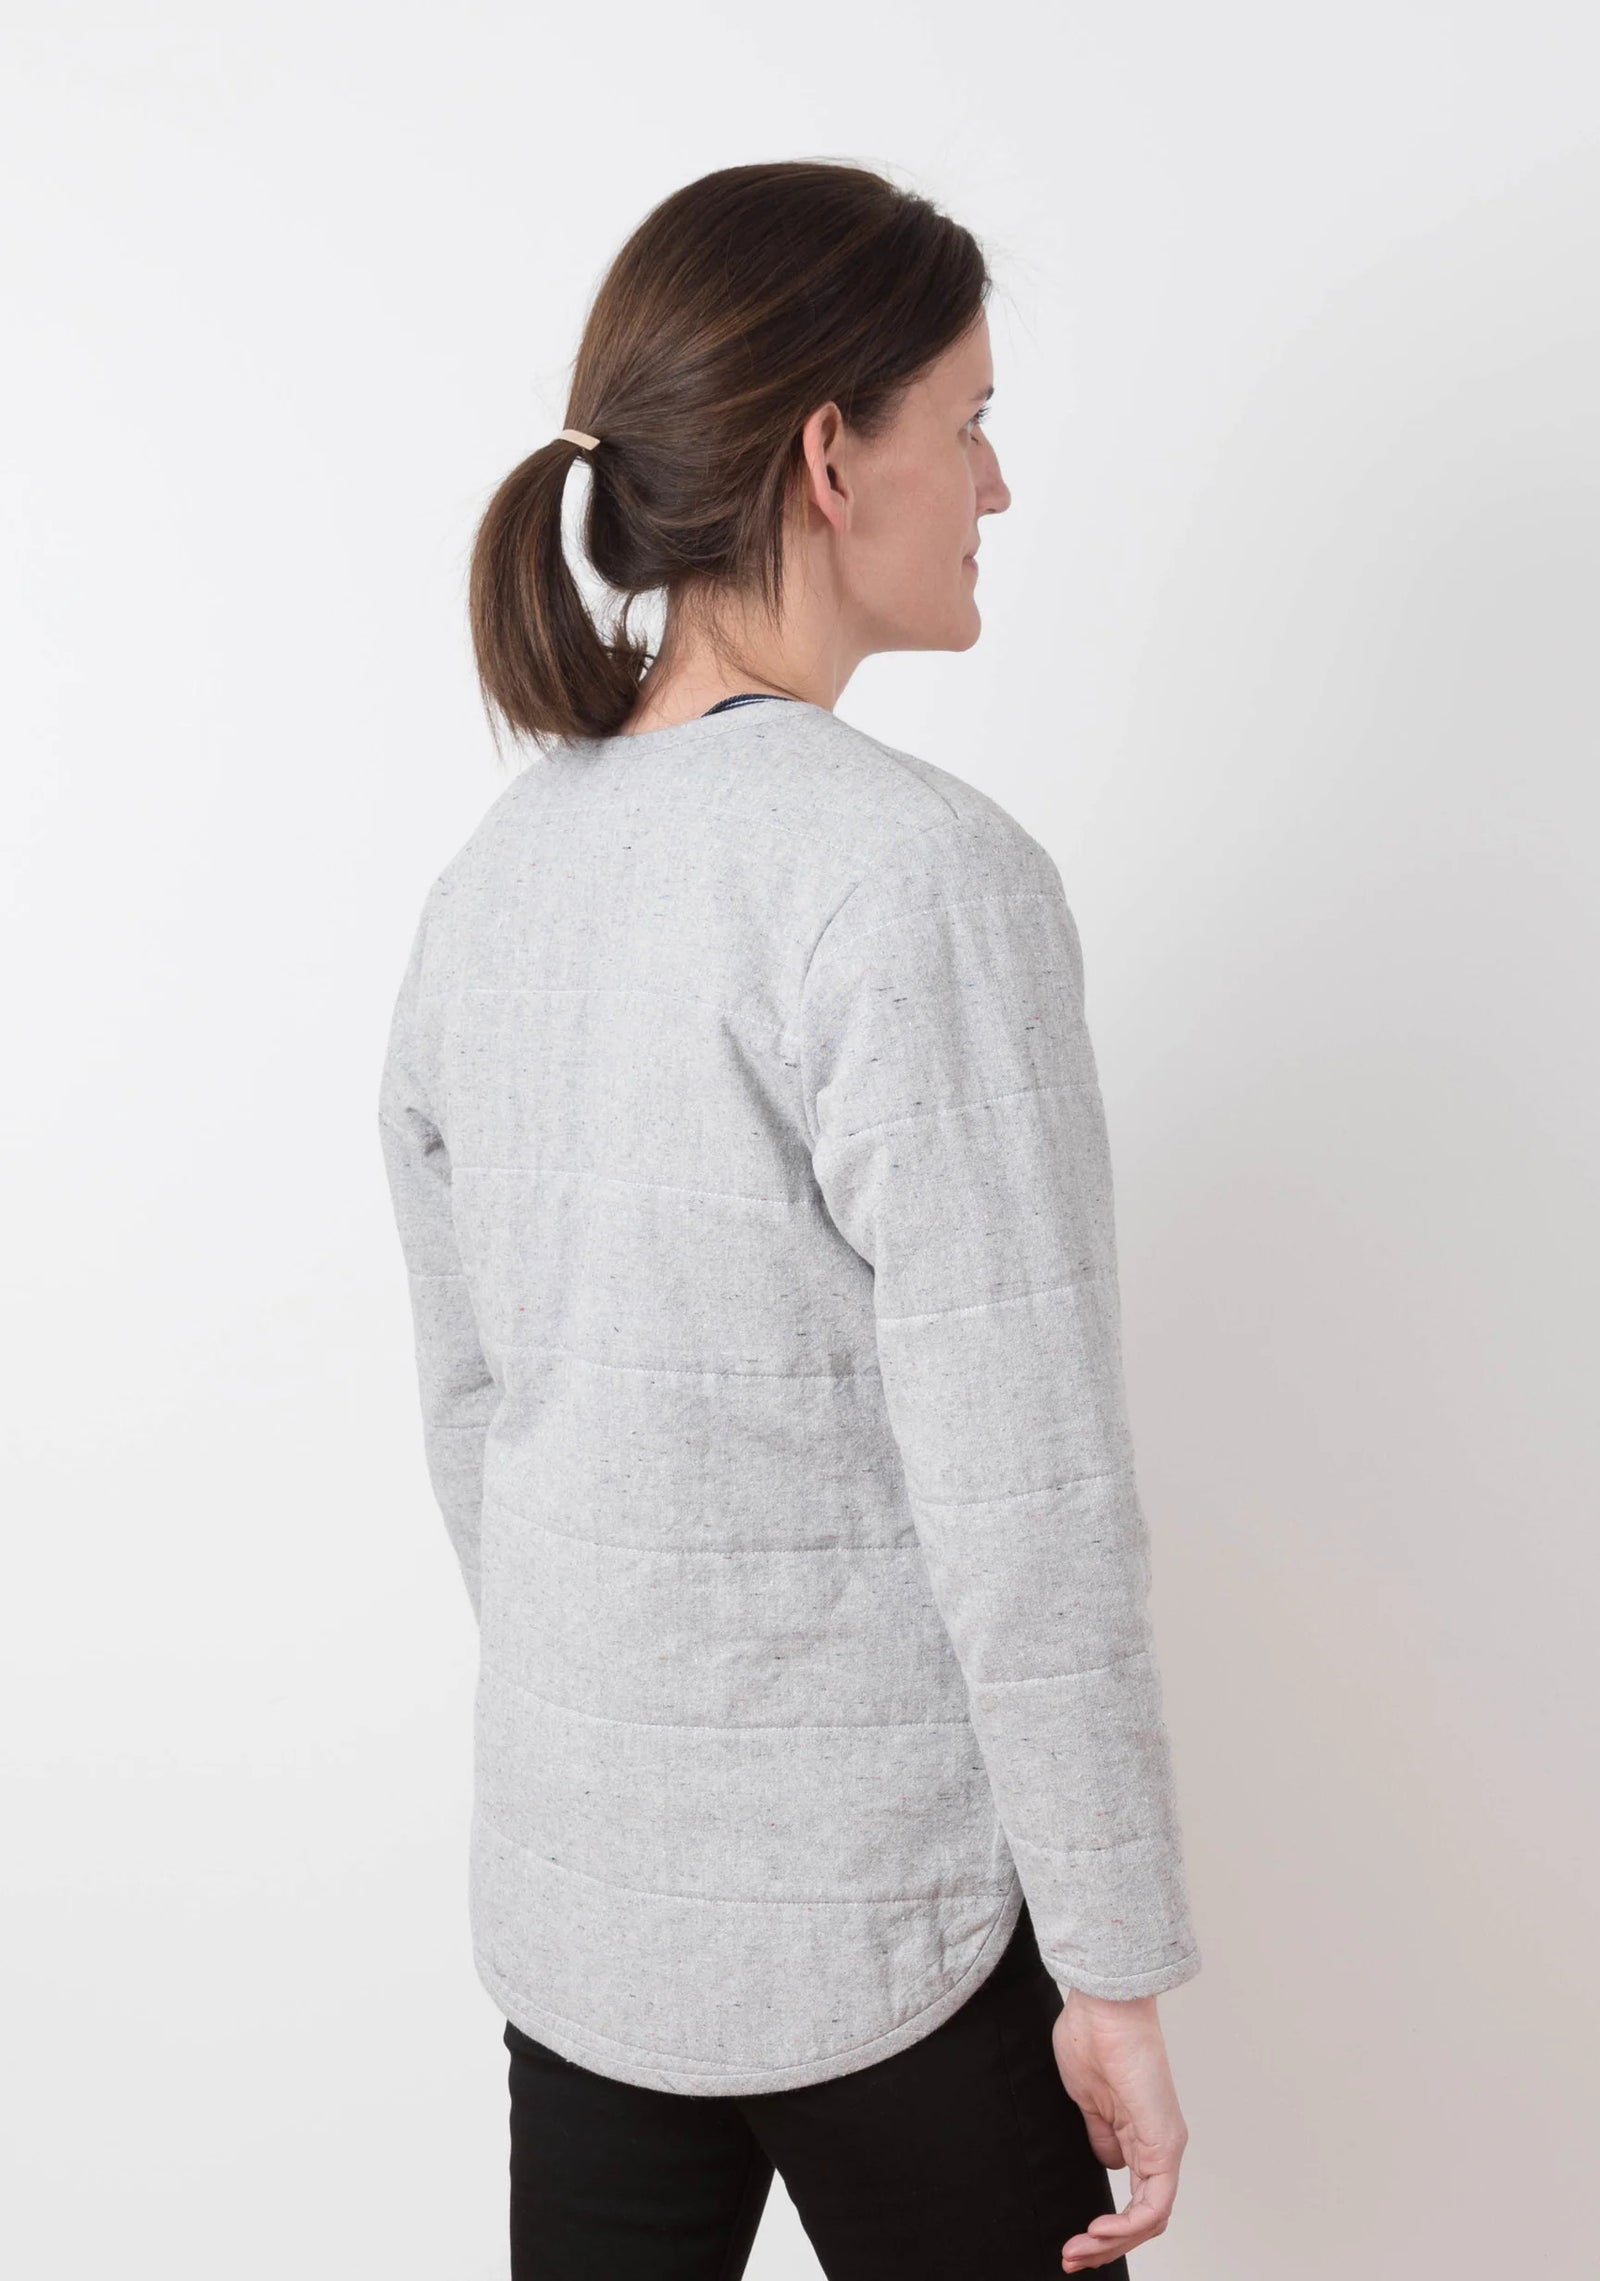 Tamarack Jacket  a Grainline Studio Sewing Pattern